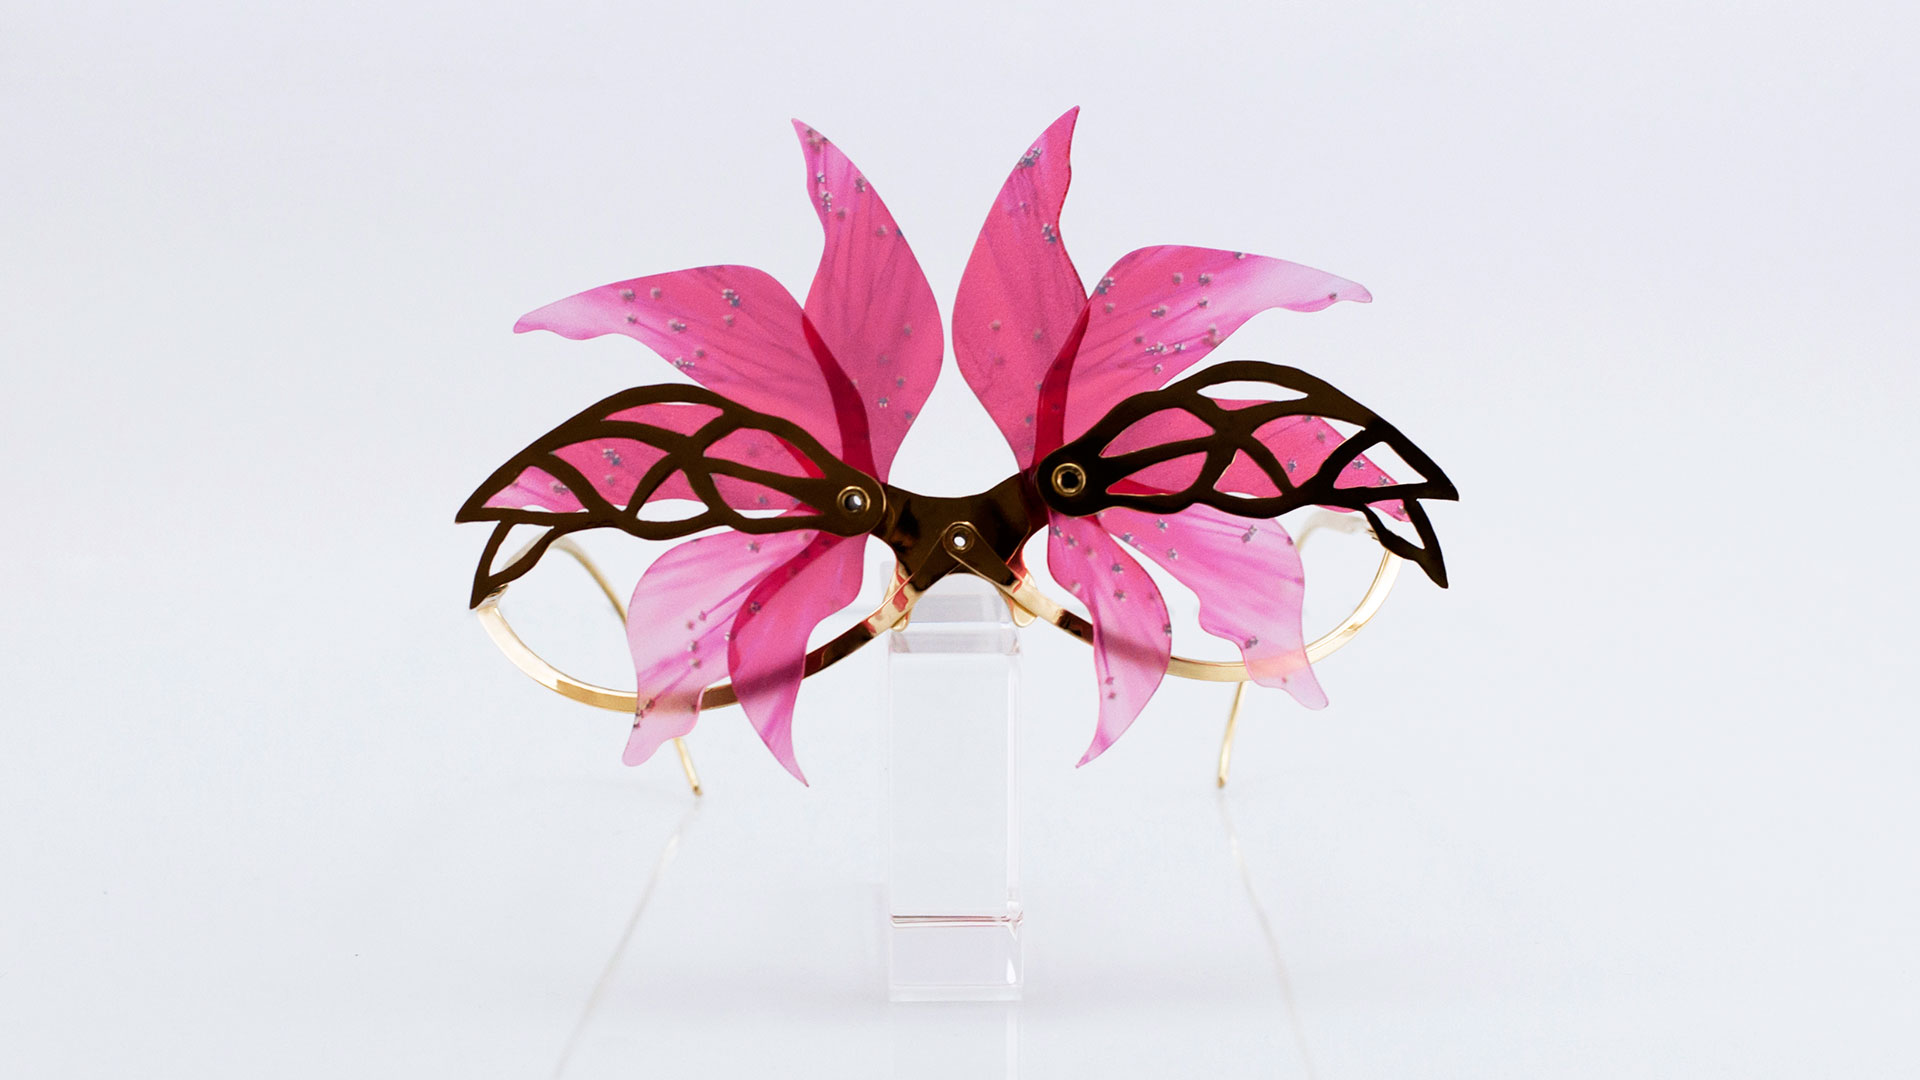 17-blooming-sonja-iglic-eyewear-googles-sunglasses-jewelry-accessories-flower-minimal-secession-kinetic-opening-folding-mechanism-designer-red